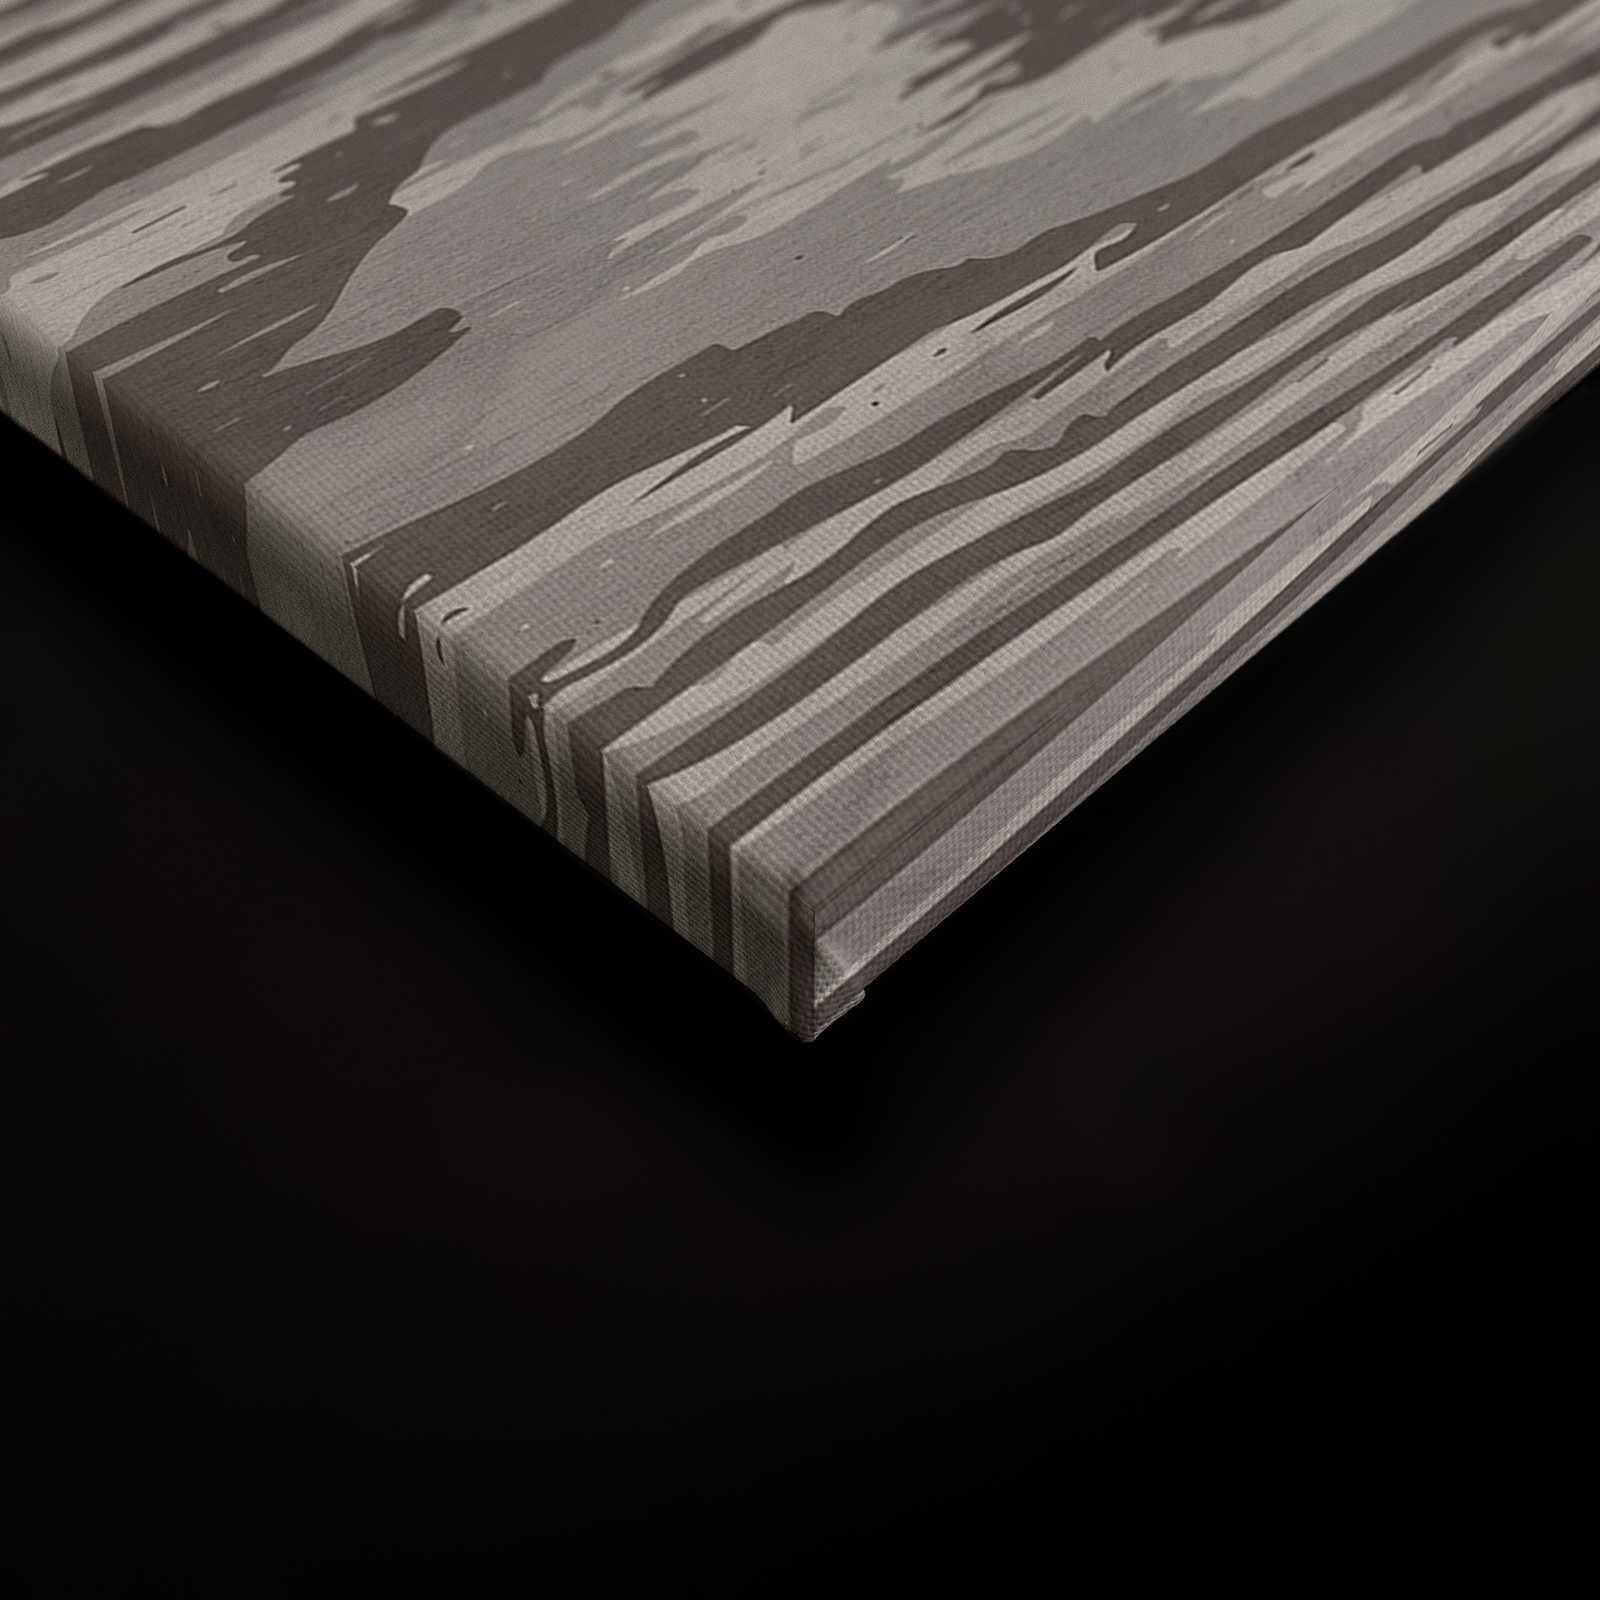             Bounty 4 - Wood-look Canvas Painting Grain XXL in Brown & Grey - 1.20 m x 0.80 m
        